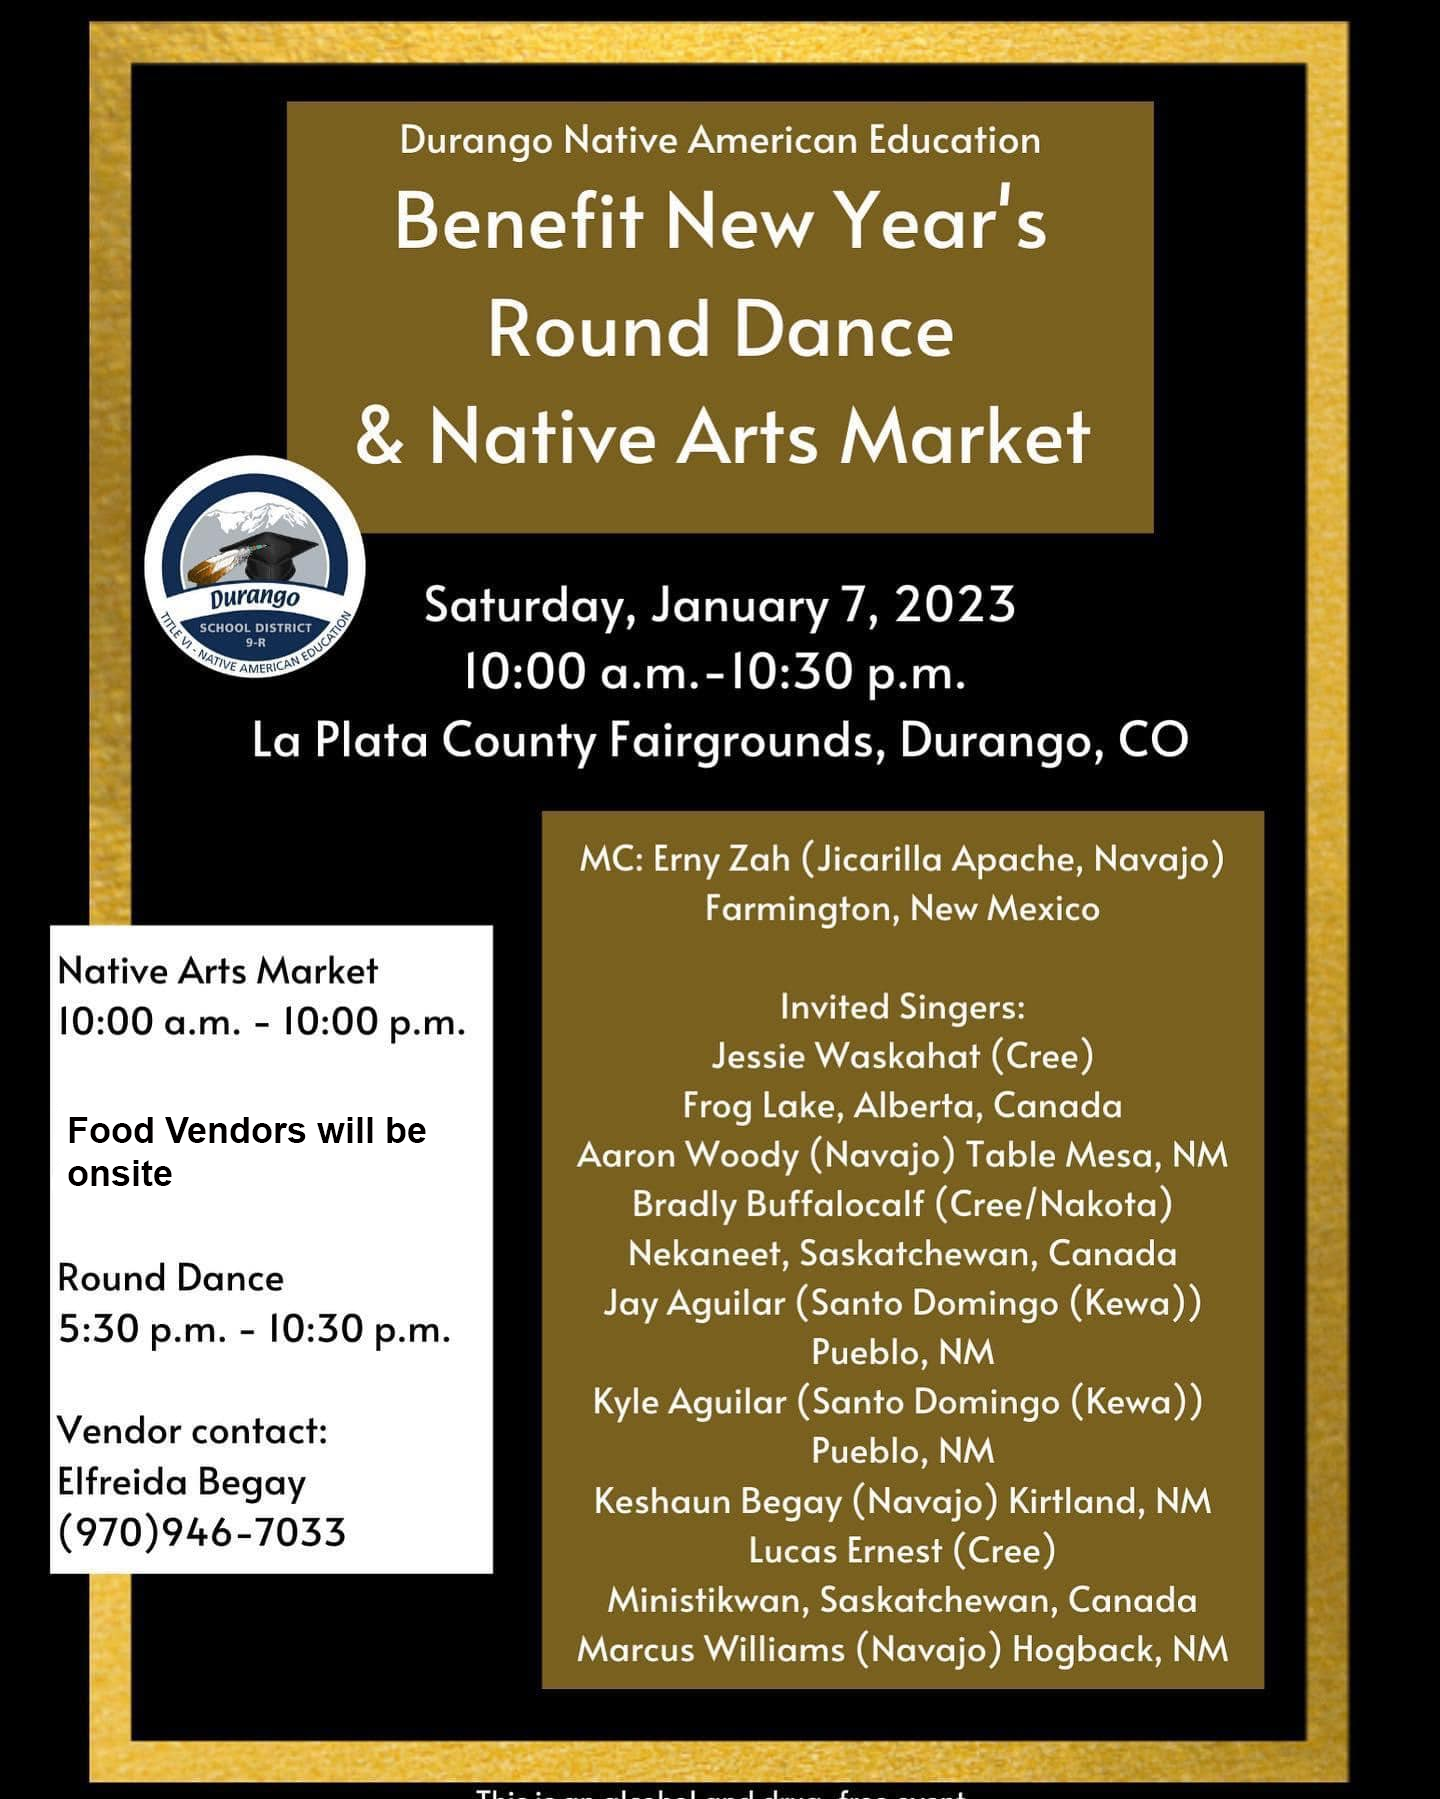 Durango Native American Education Benefit New Year’s Round Dance & Native Arts Market